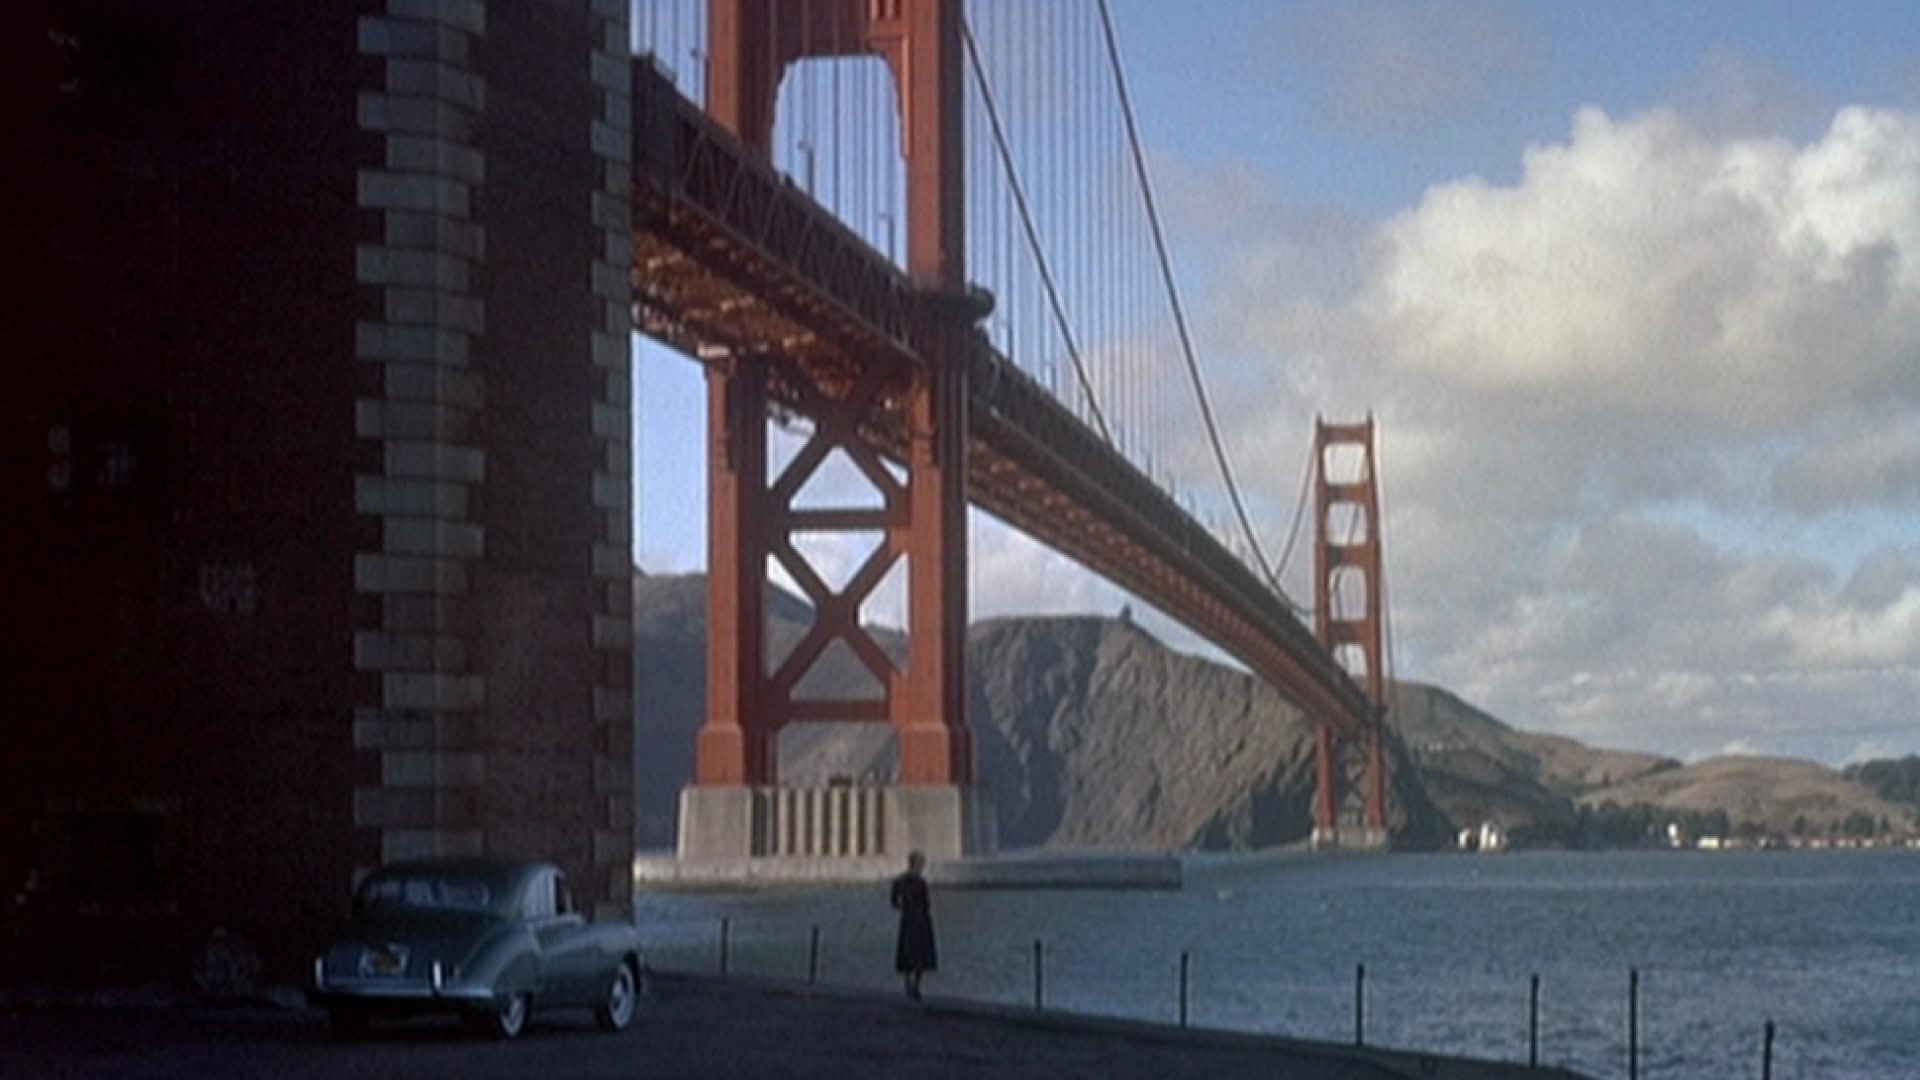 VERTIGO film still of the Golden Gate Bridge